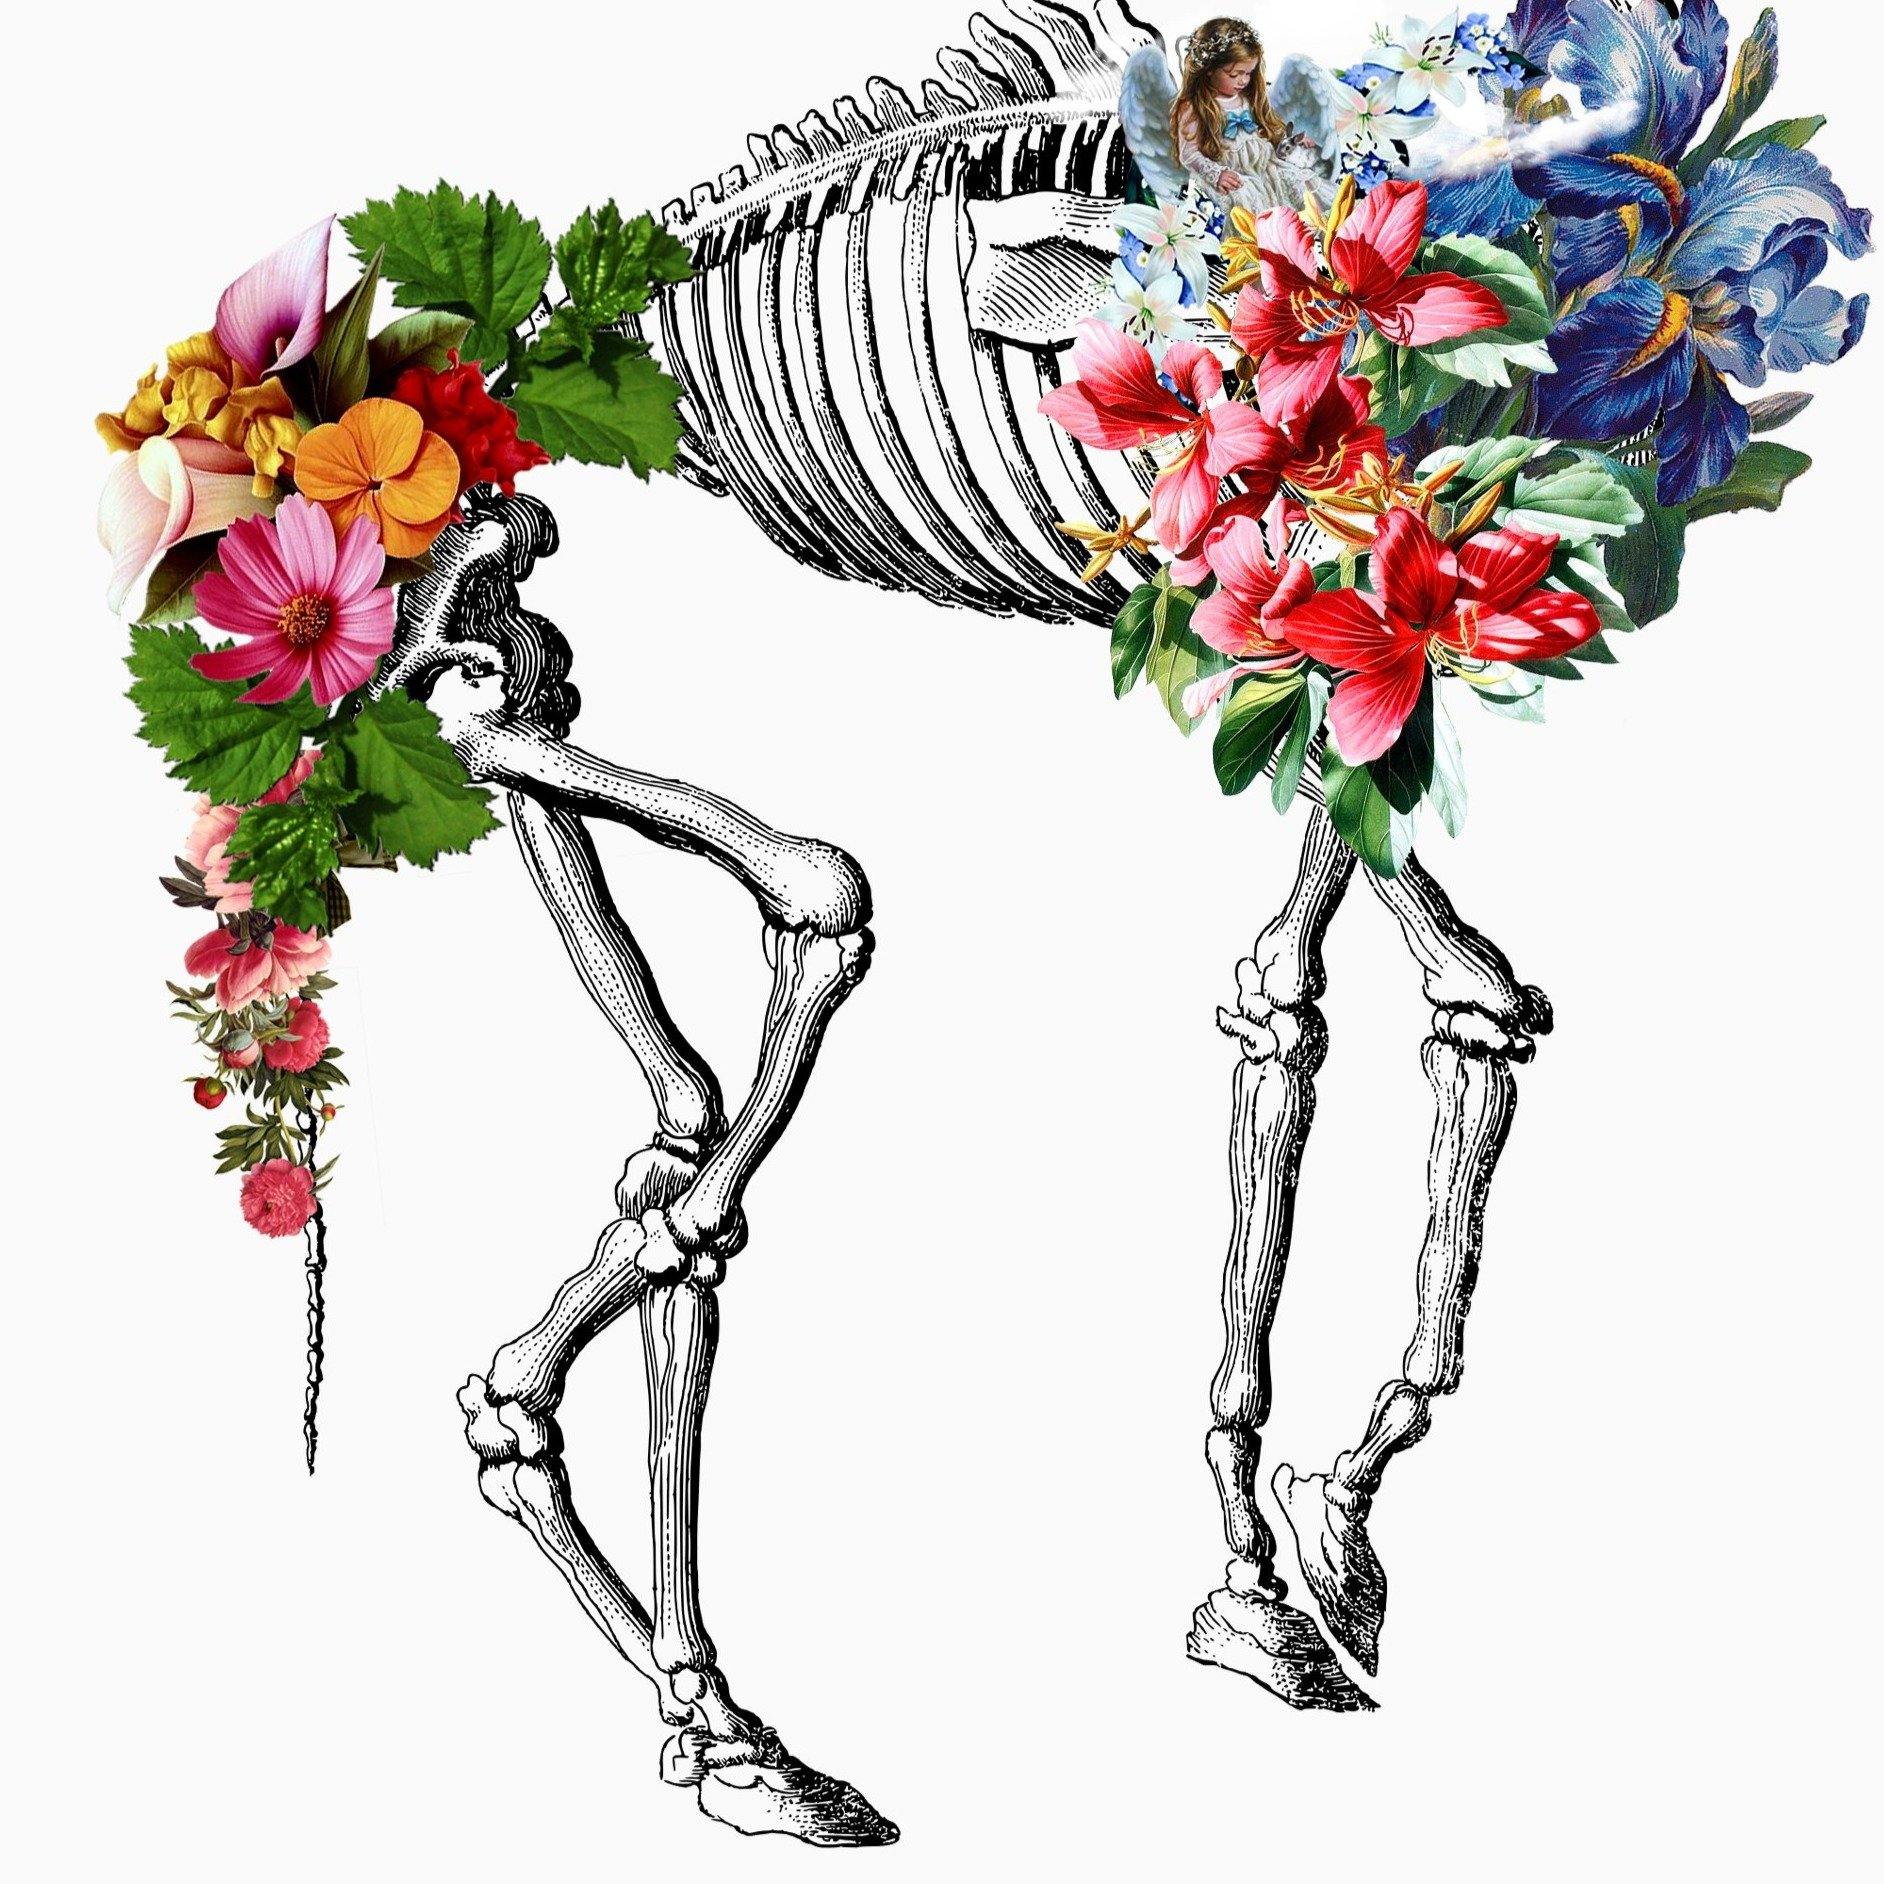 Camel Skeleton Anatomical Flowers | Anatomical Body Print | Flower Art Print | Illustration Poster - 98types